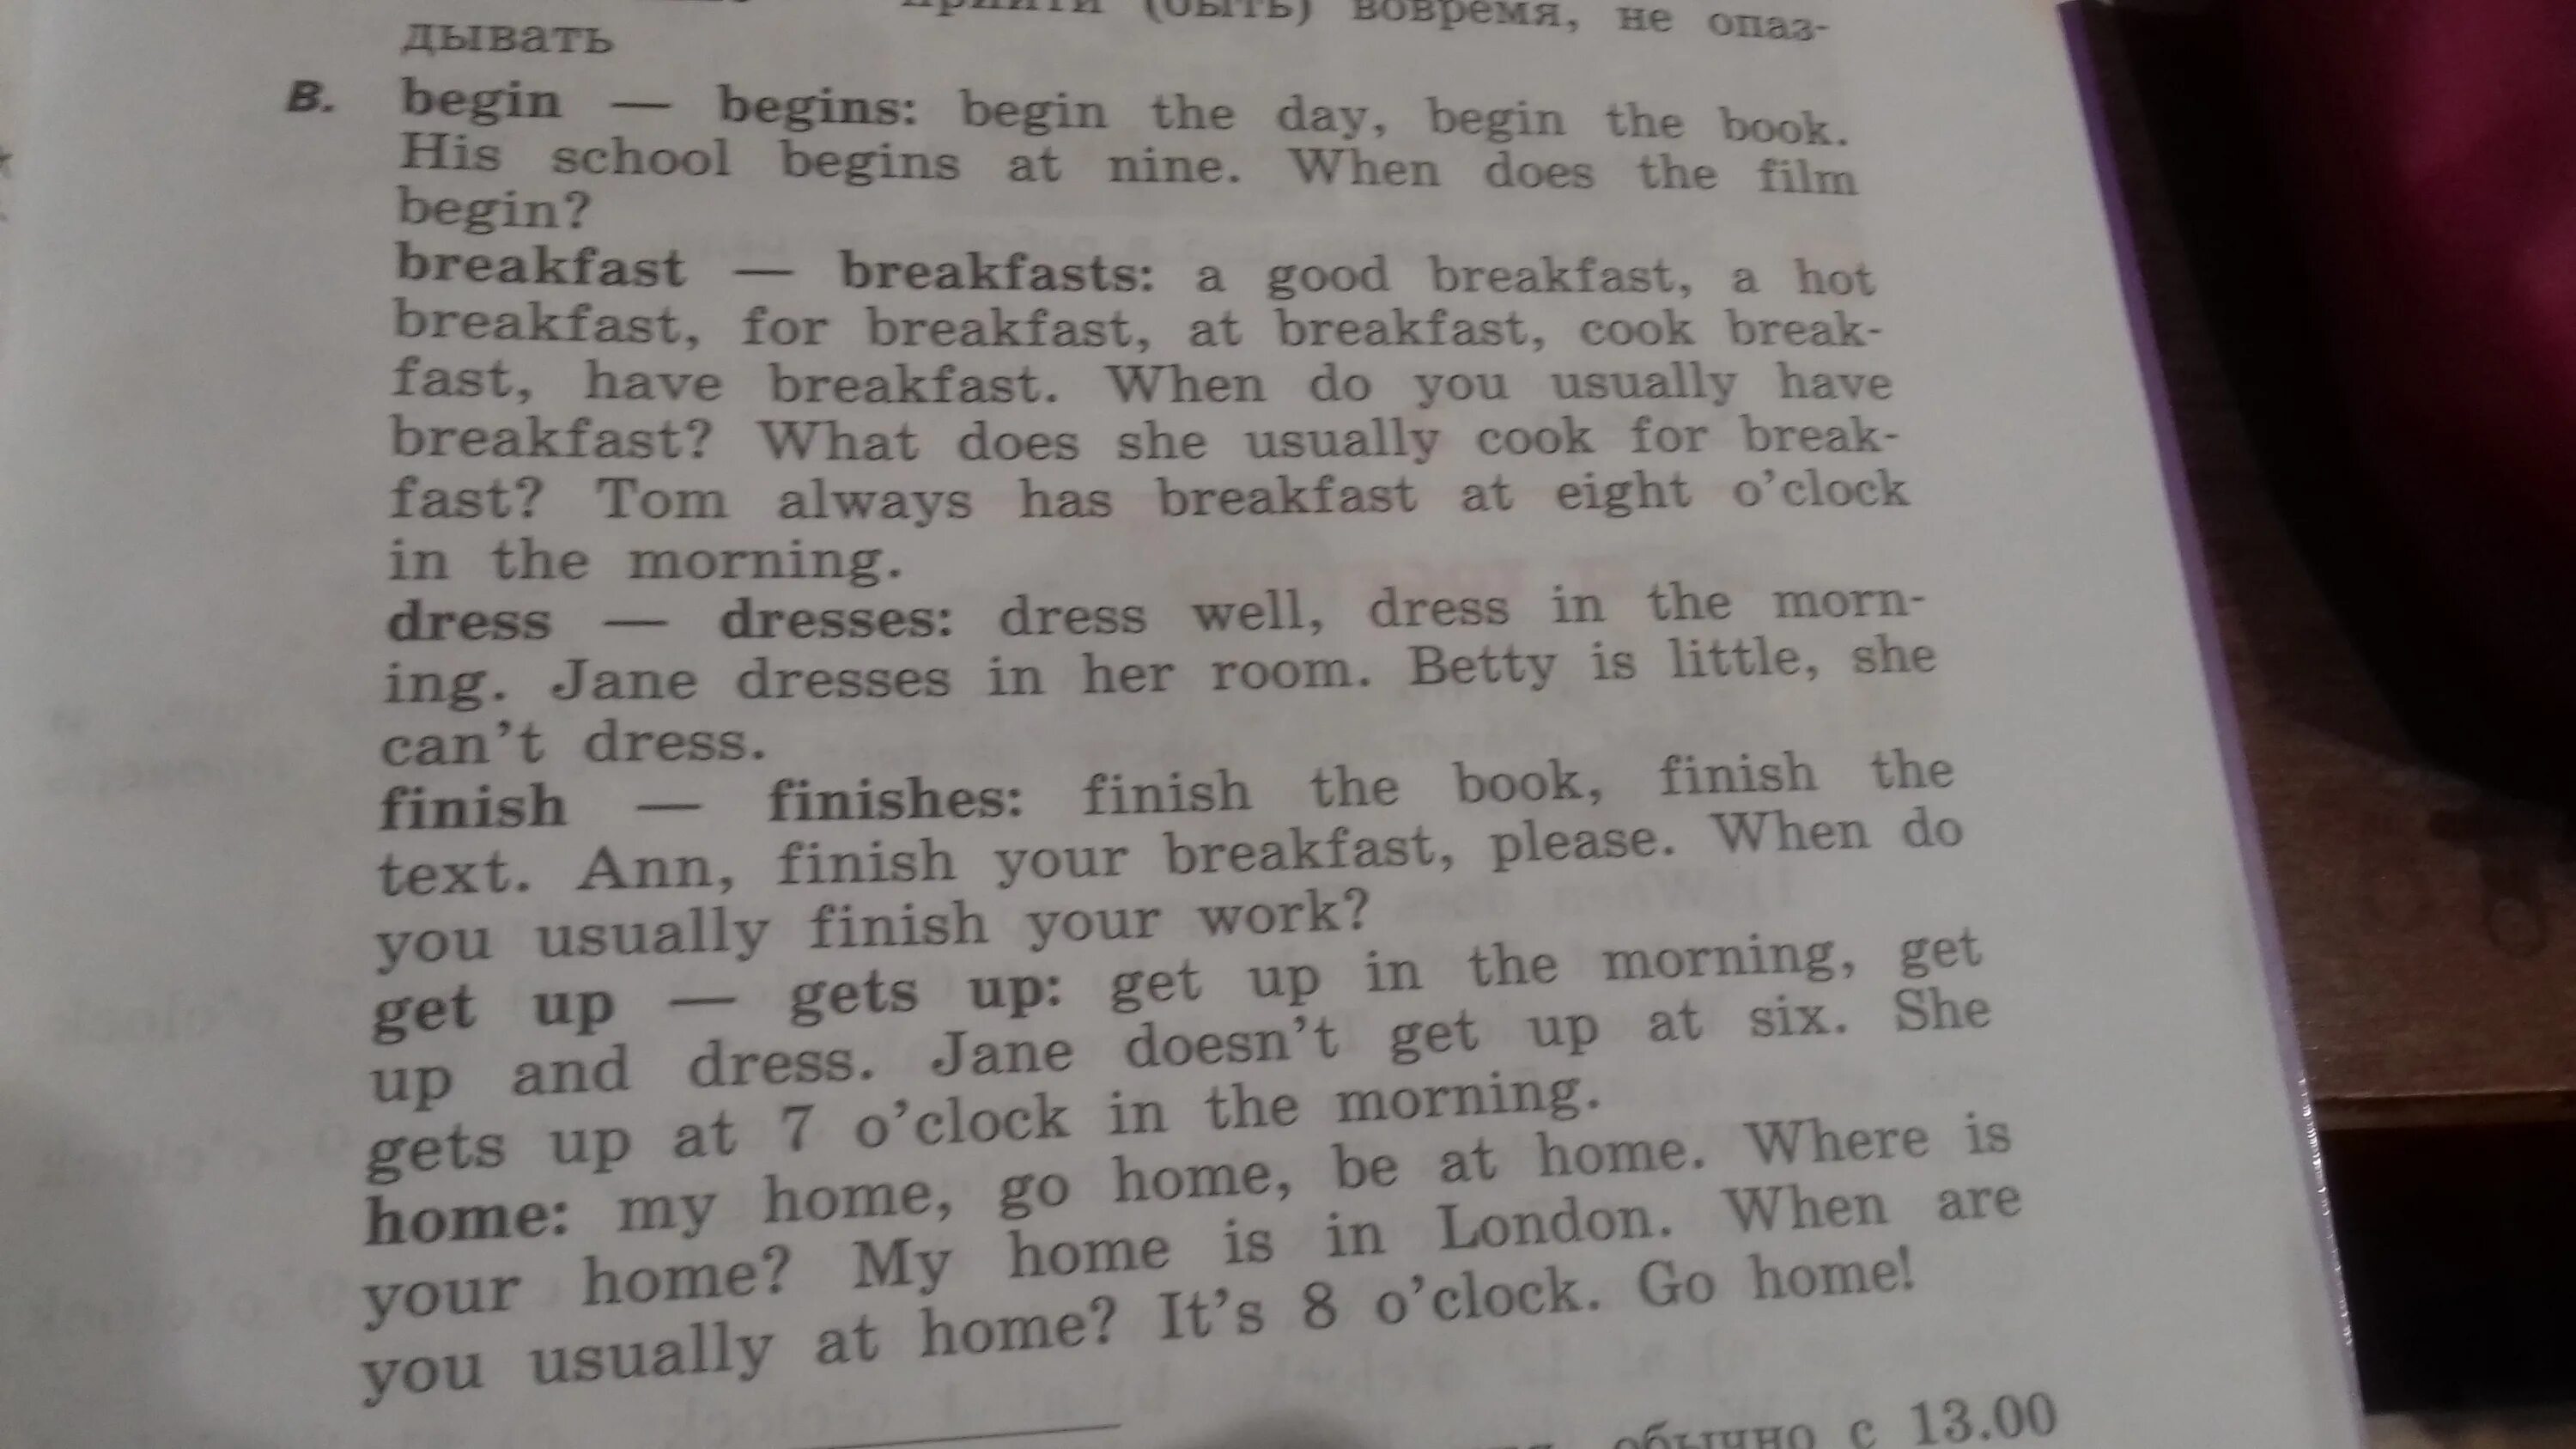 Begging текст. Begin перевод. Перевод текста Breakfast. Begin the Day. Begin the Day перевод на русский.